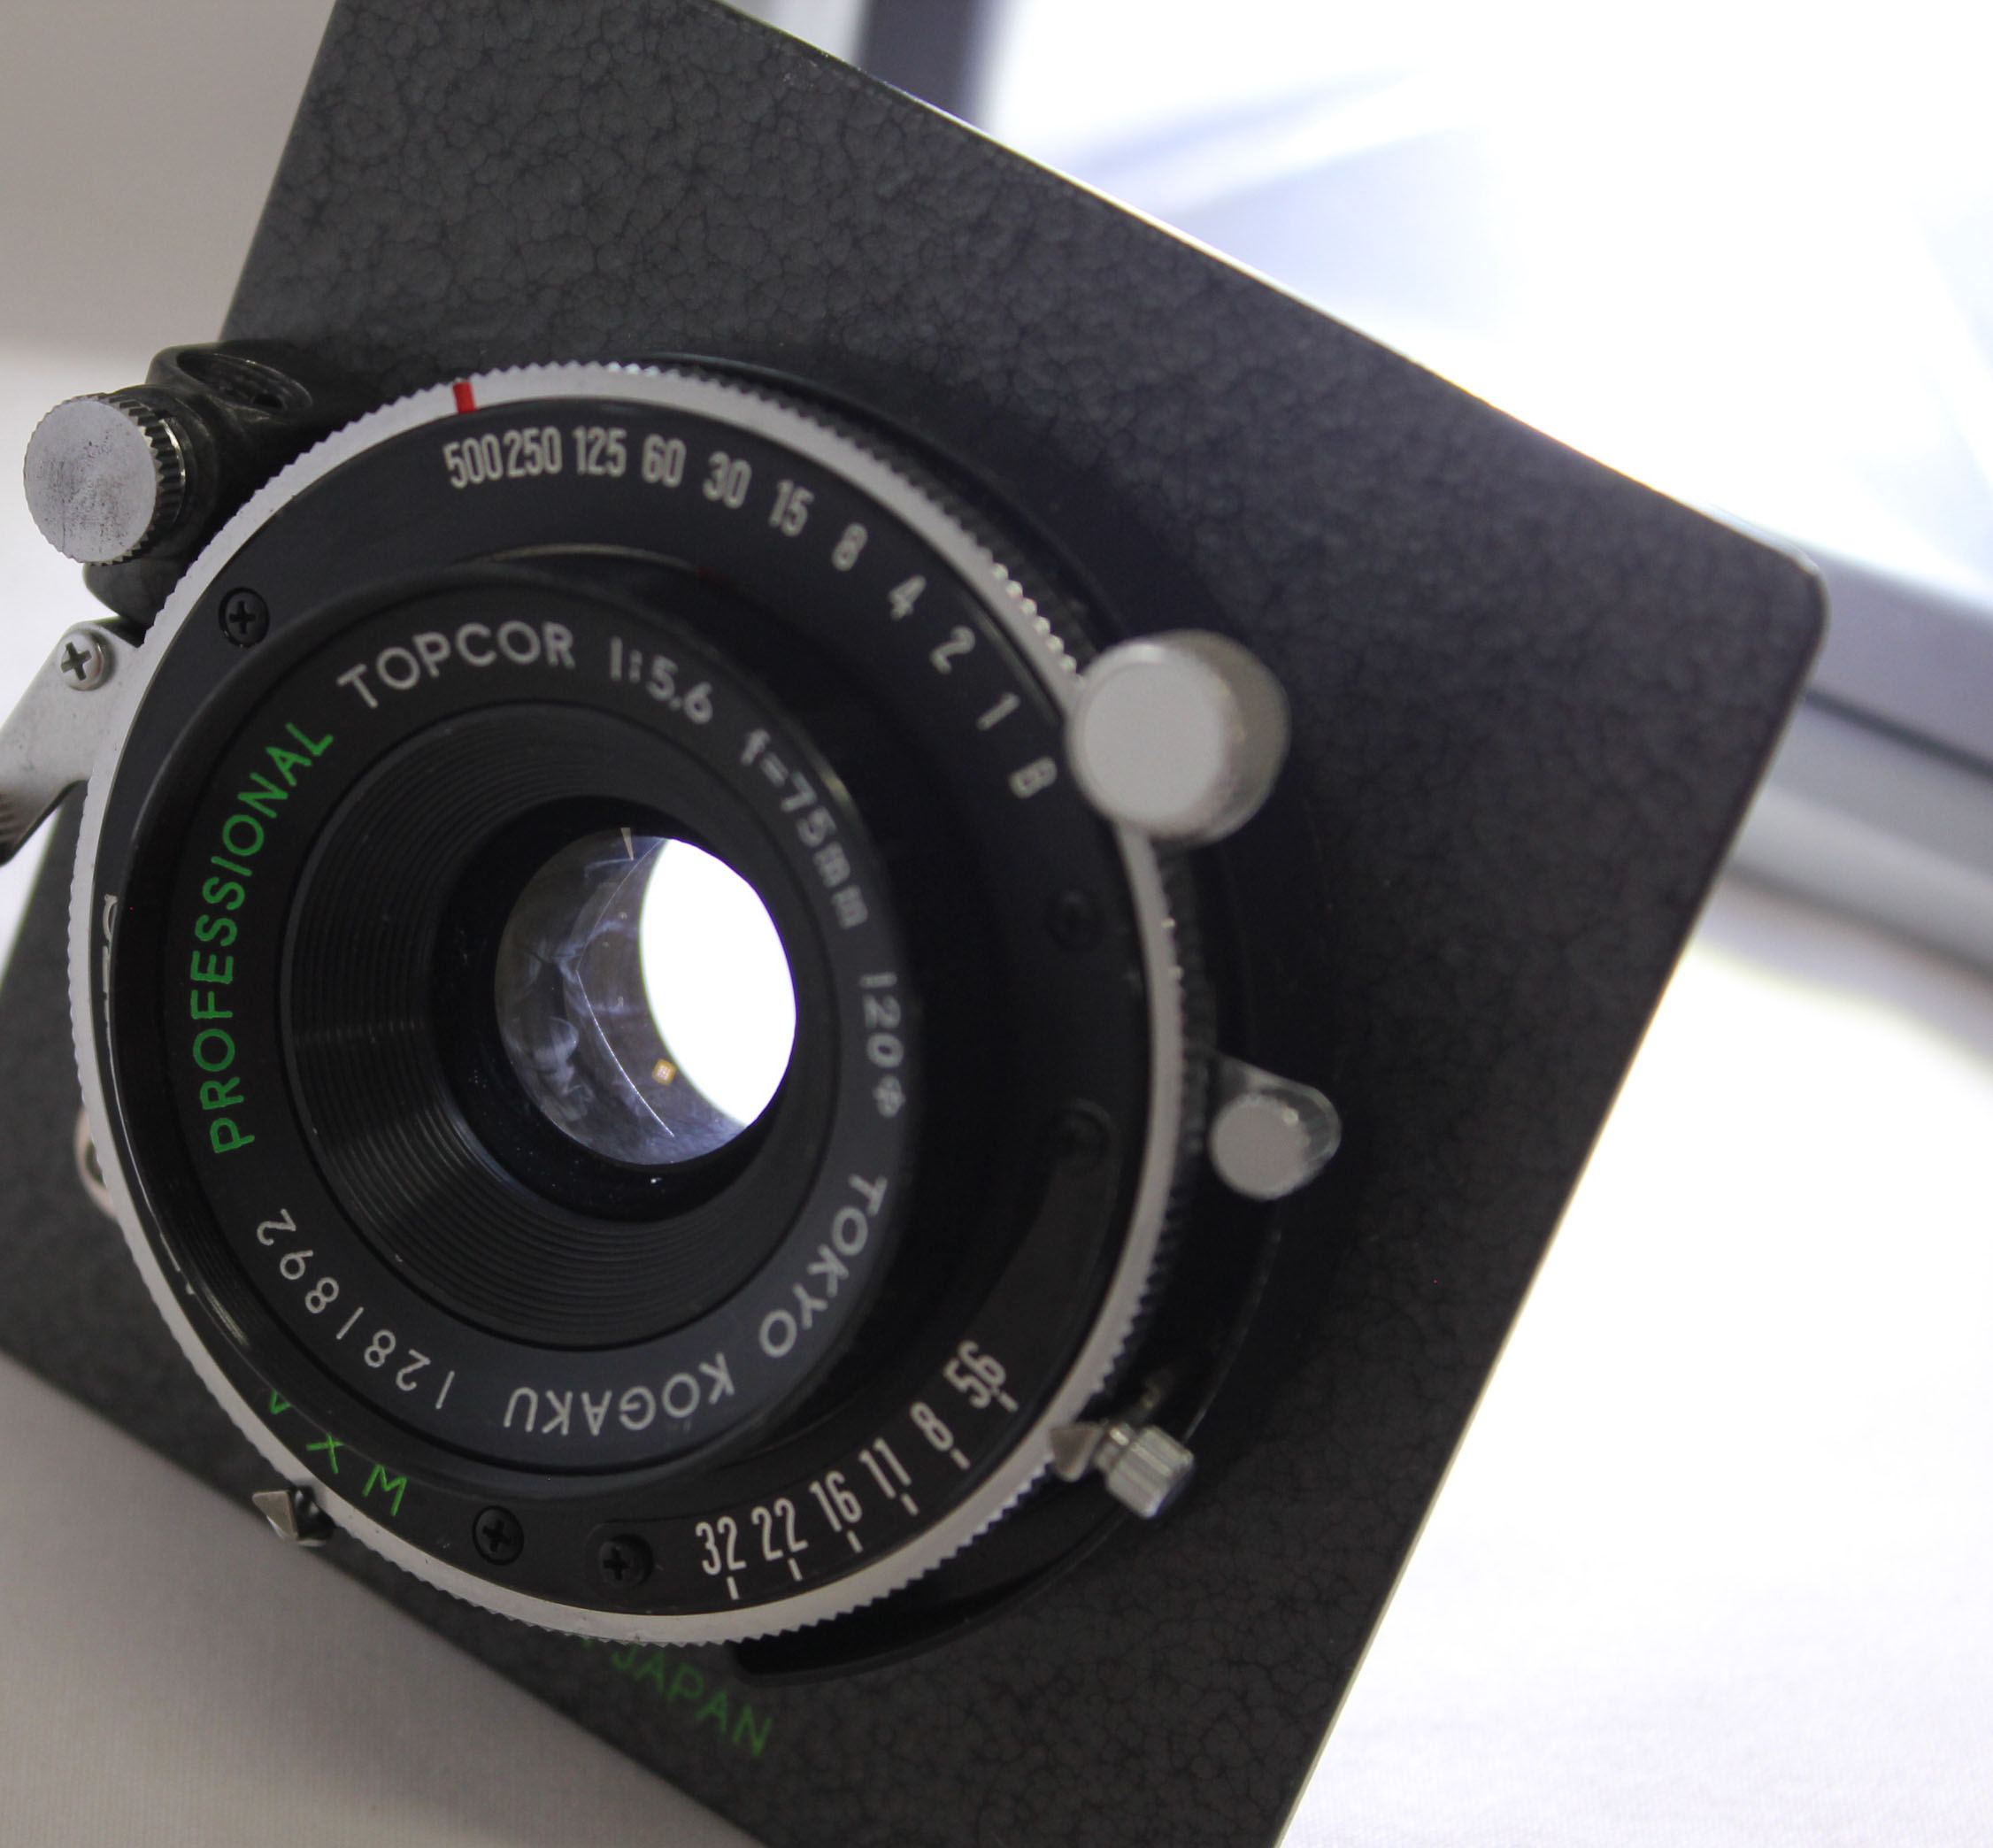 Tokyo Kogaku Professional Topcor 75mm F/5.6 Large Format Lens with Seiko Shutter and Horseman Board from Japan Photo 11